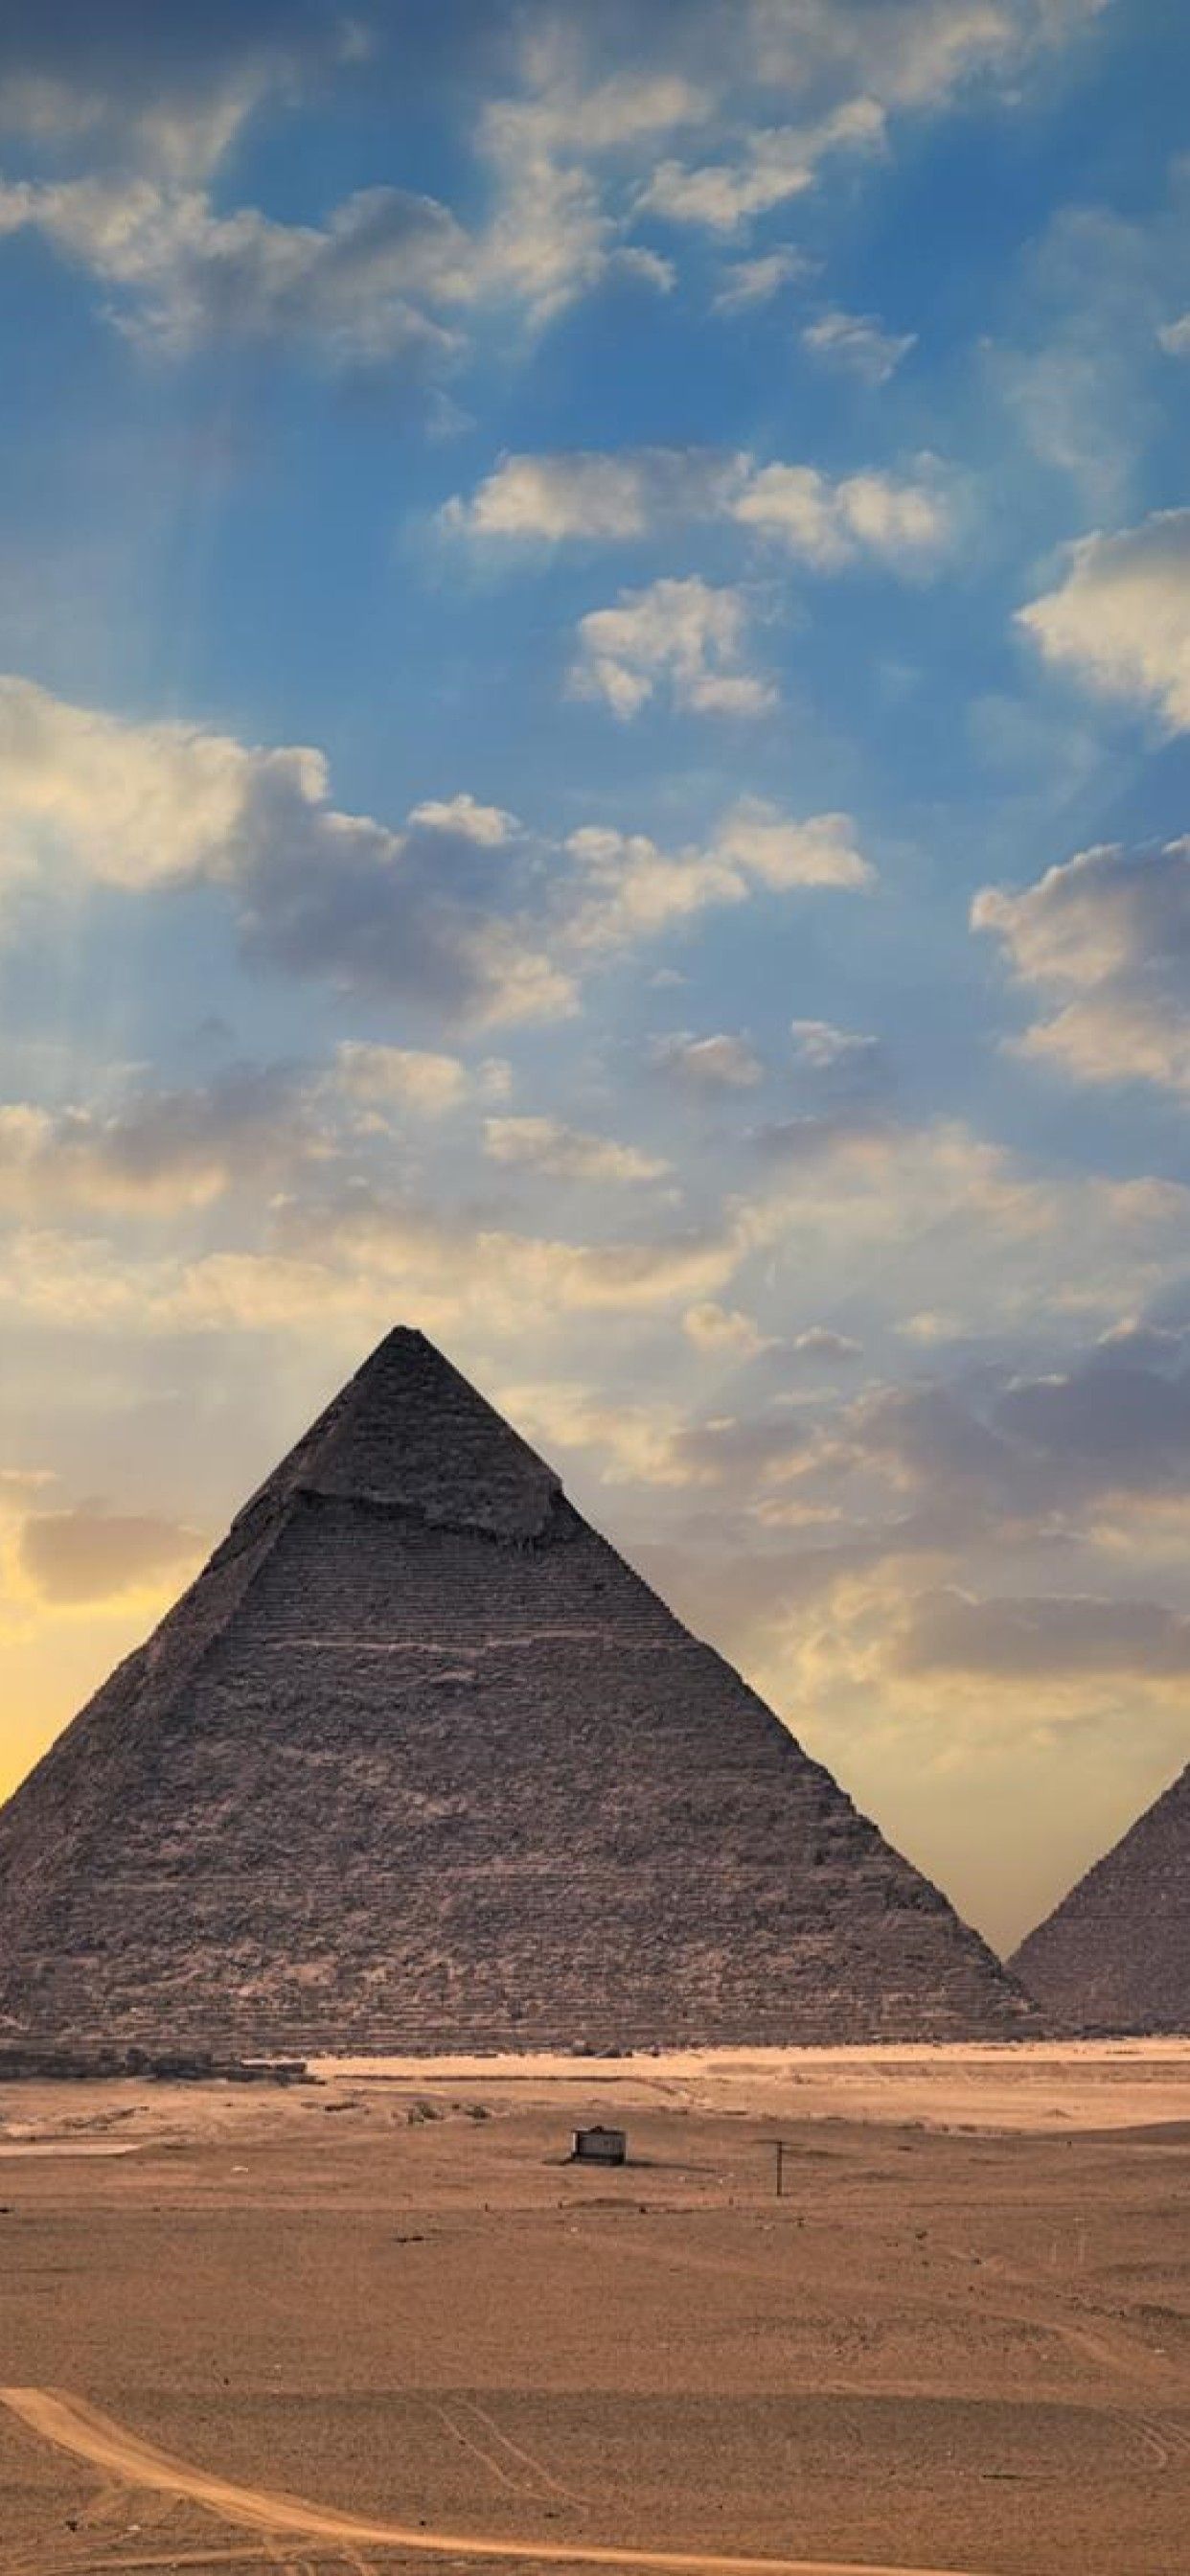 Egypt Pyramids iPhone XS MAX HD 4k Wallpaper, Image